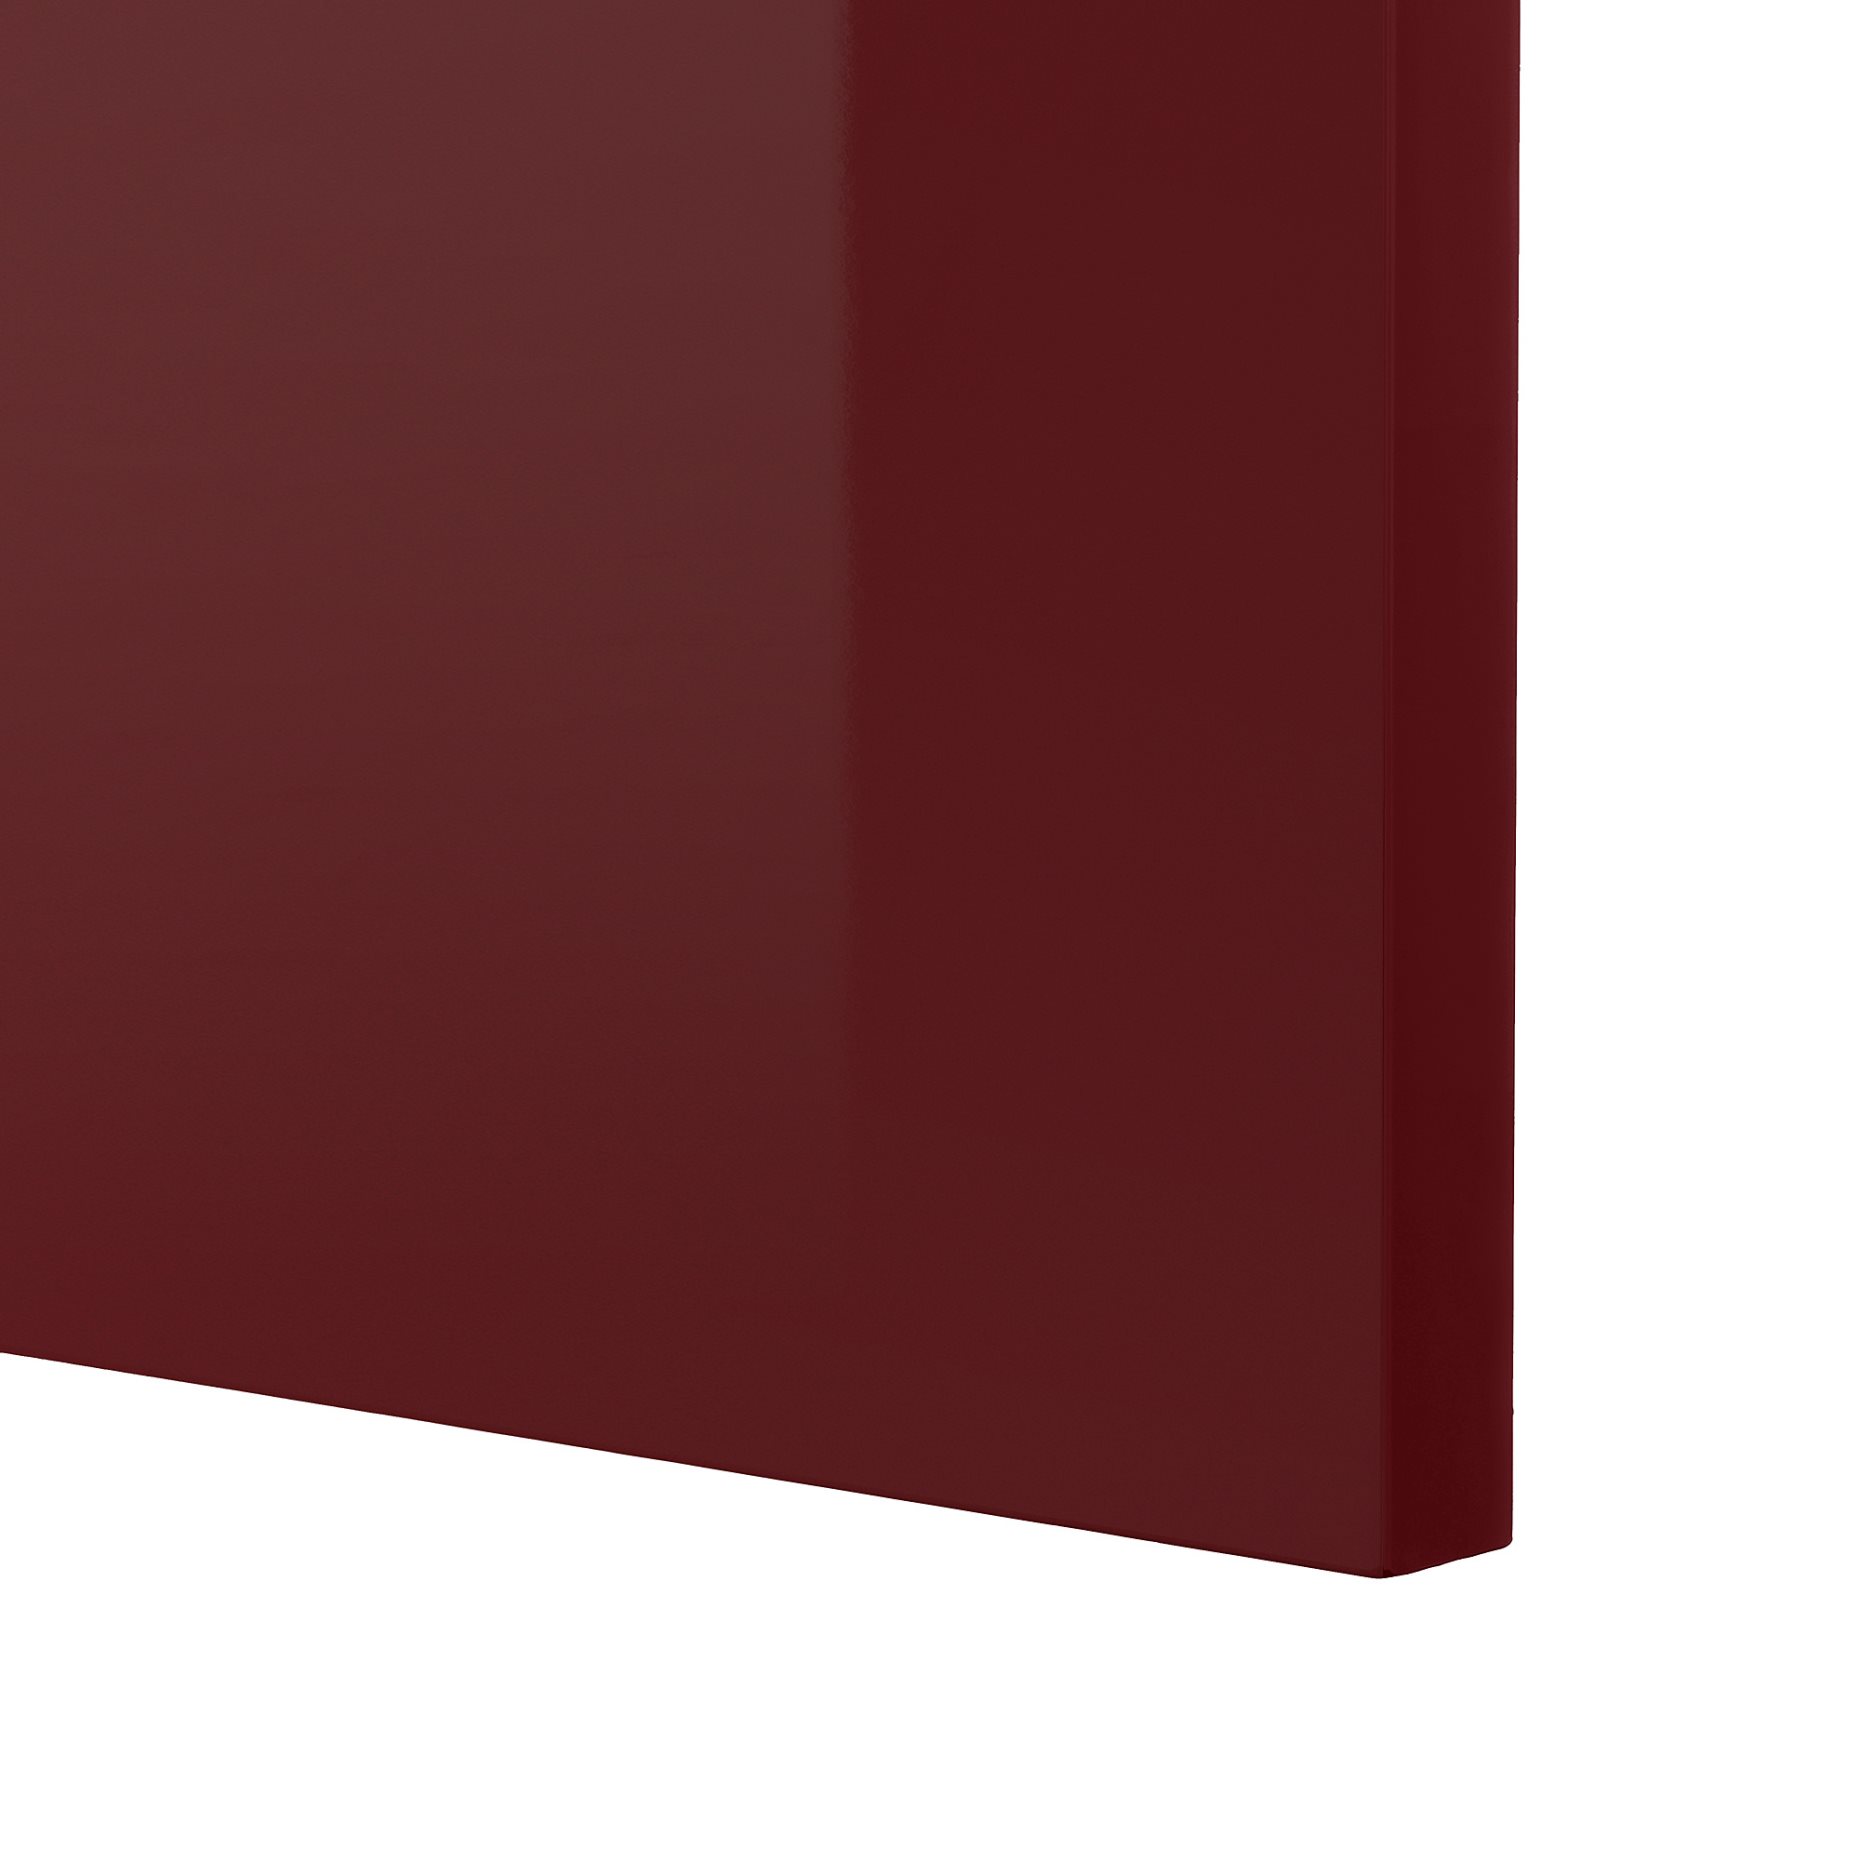 METOD, ψηλό ντουλάπι με ράφια, 40x60x200 cm, 794.595.47